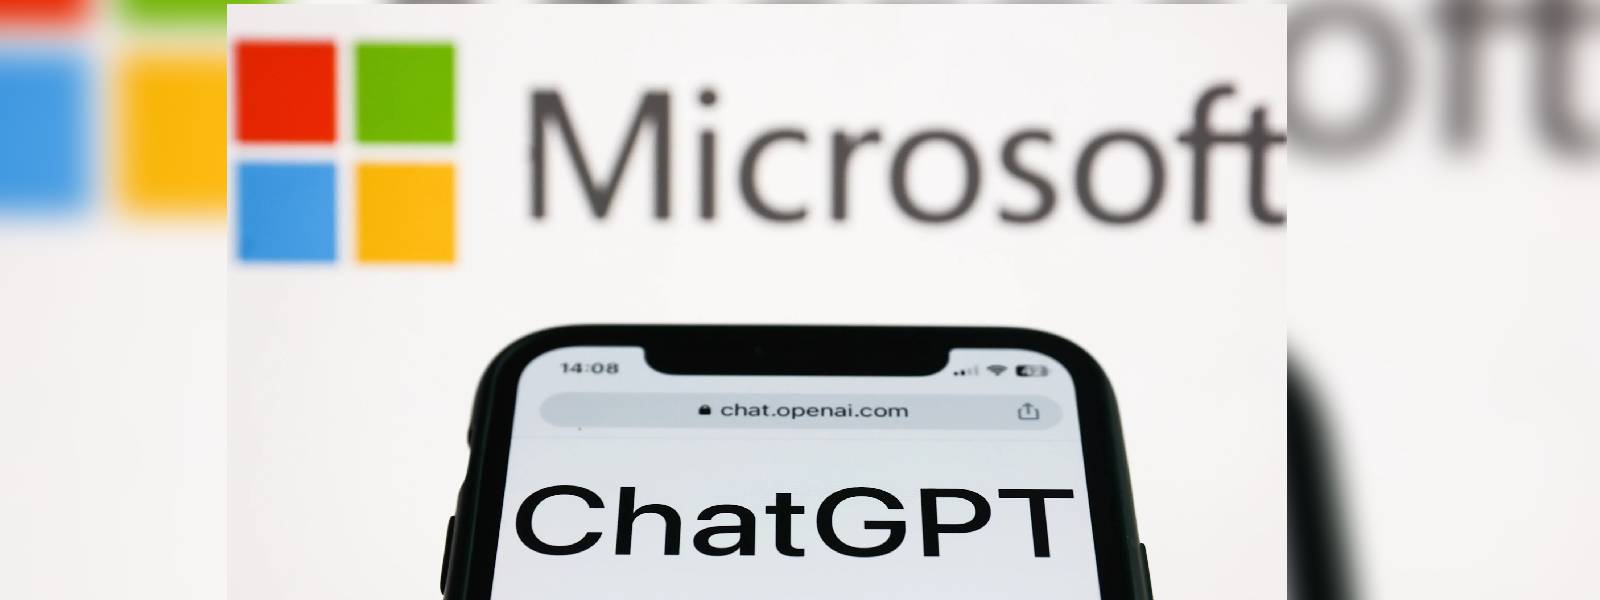 Microsoft announces multi-billion dollar investment in CHATgpt’s maker Open AI